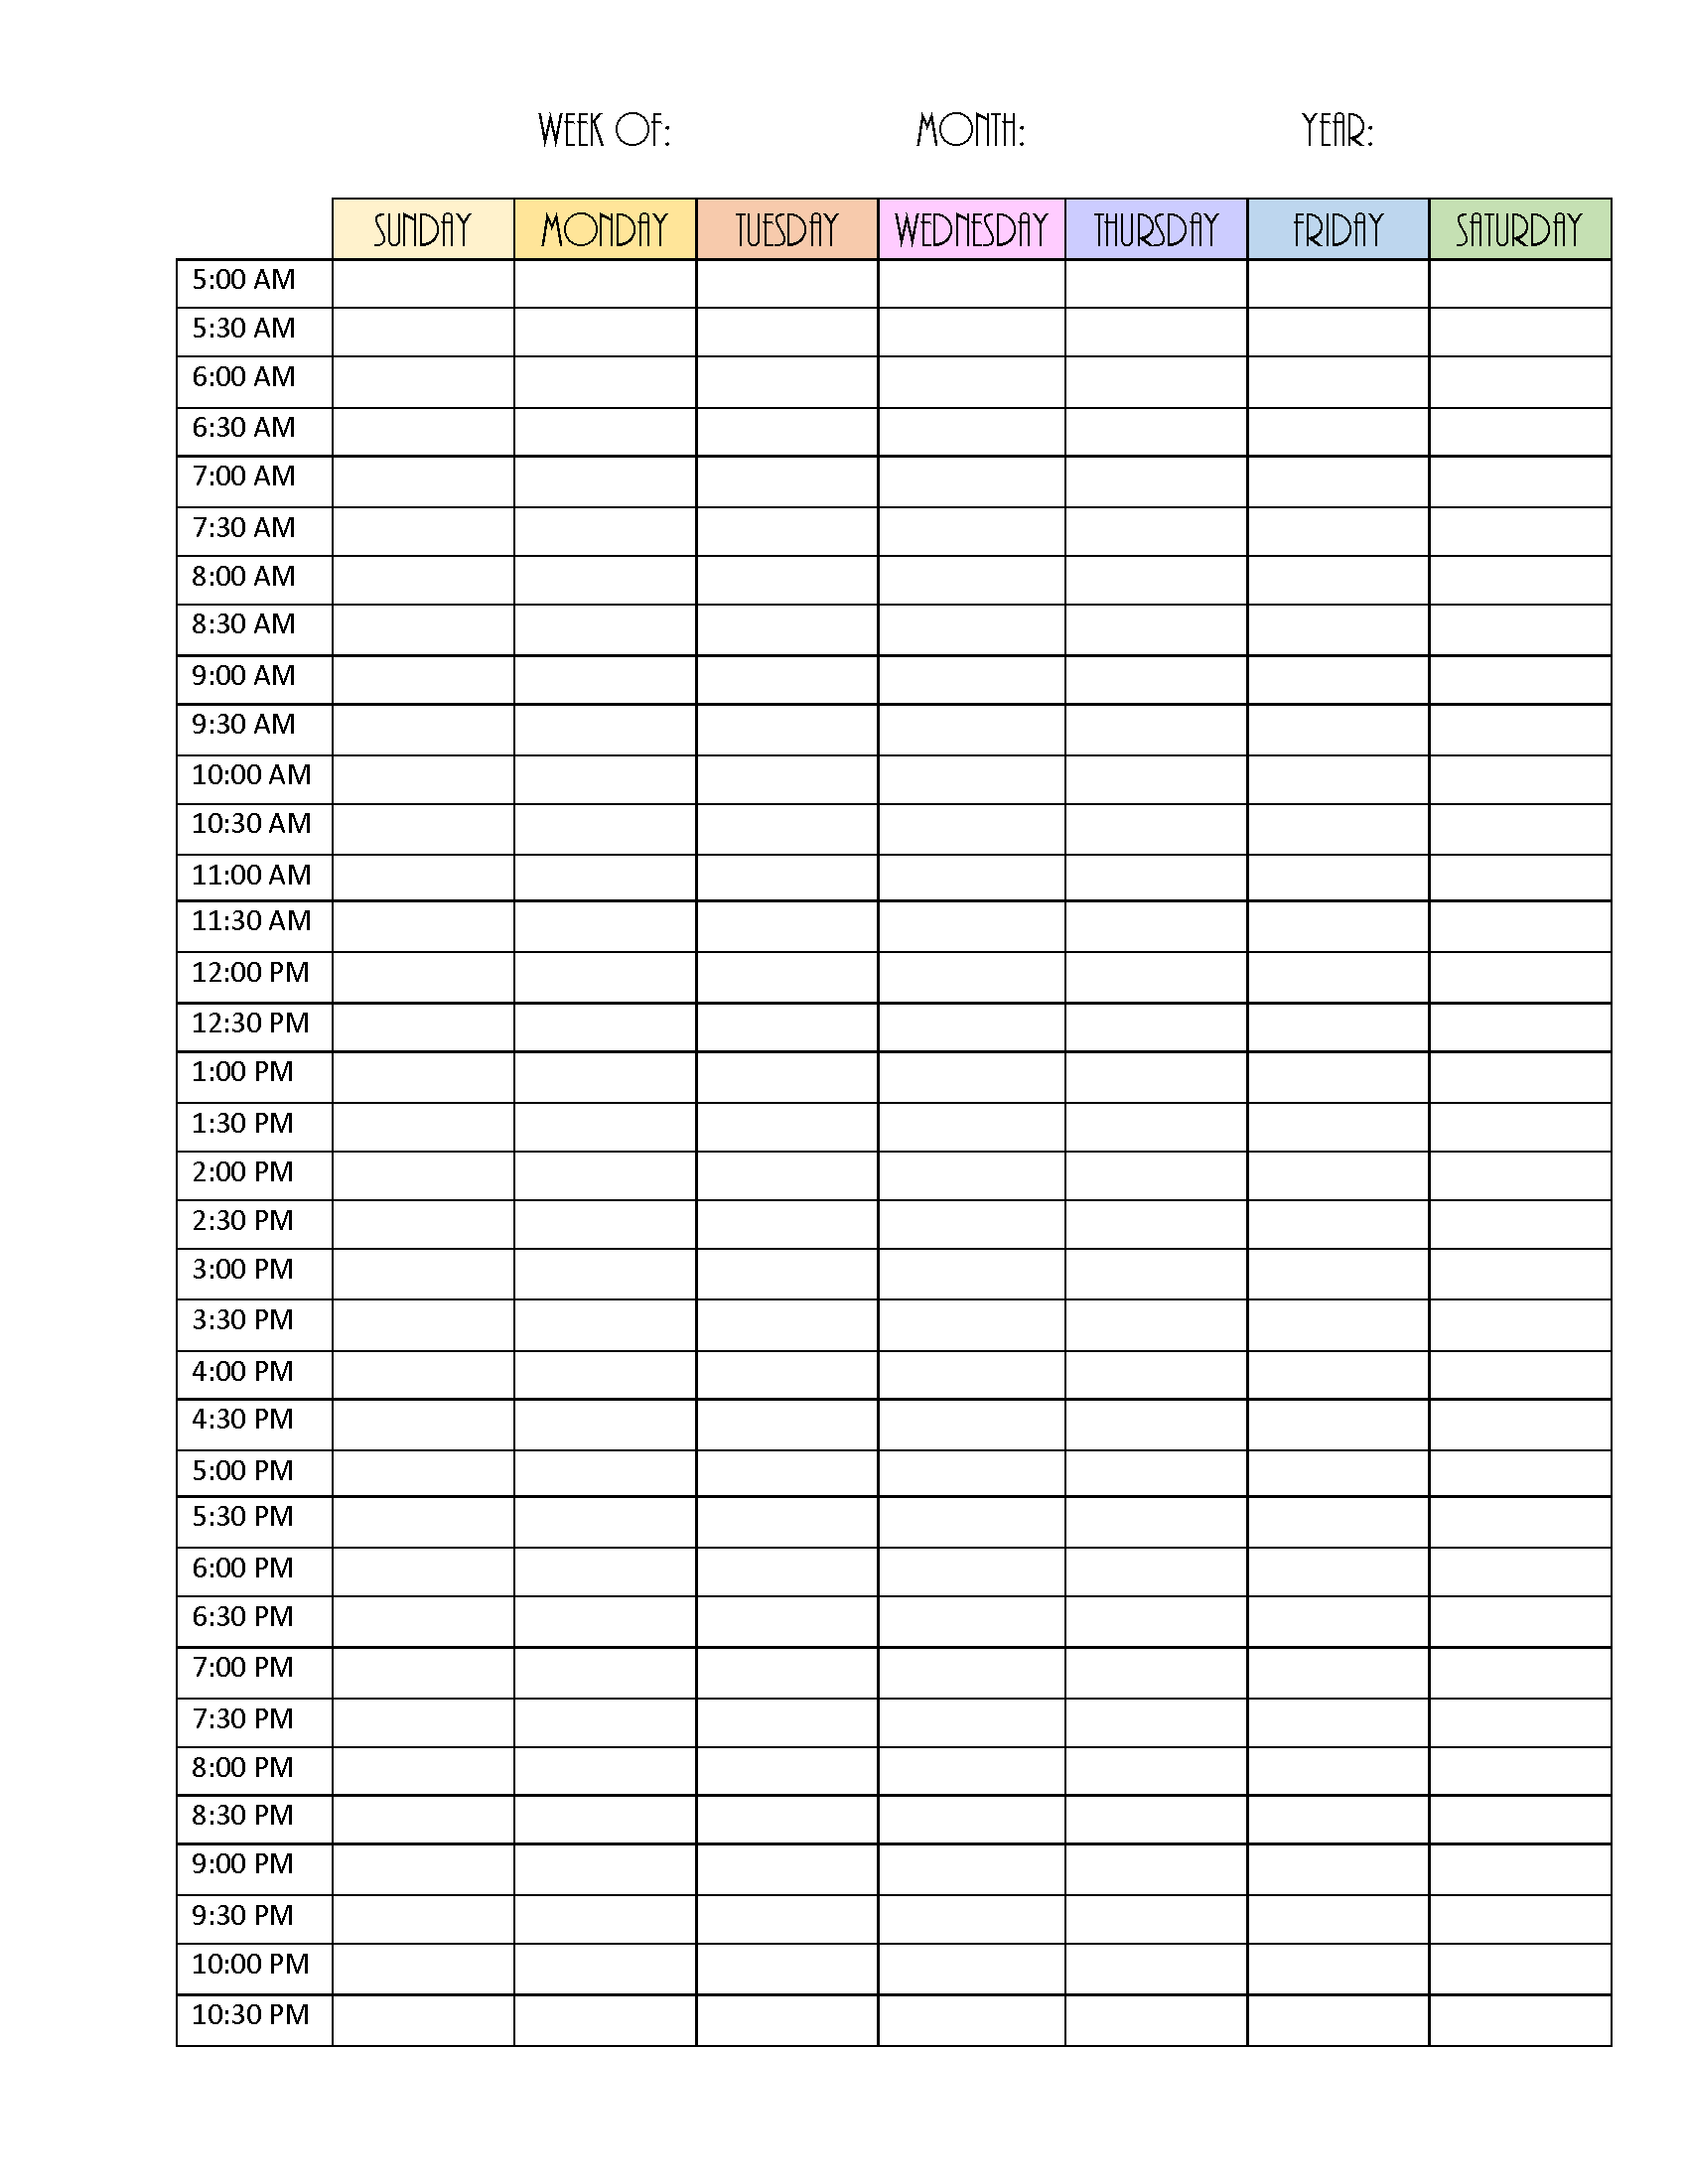 universal-monday-to-friday-blank-kids-schedule-get-your-calendar-blank-weekly-calendar